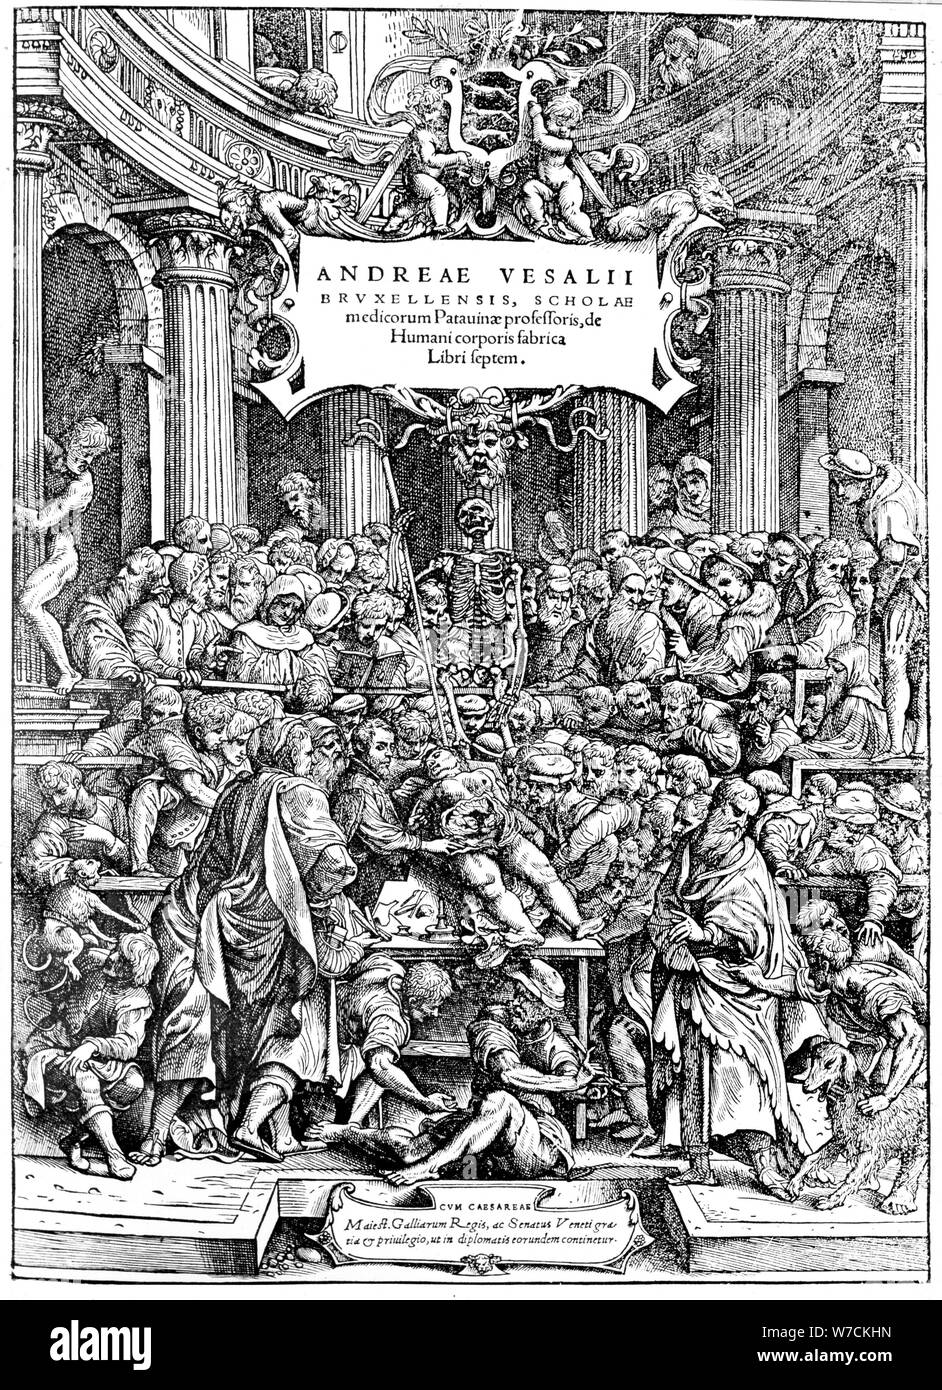 Titel Seite von Andreas Vesalius "De Humani Corporis Fabrica", anzeigen Vesalius Körper seziert, 1543. Artist: Andreas Vesalius Stockfoto